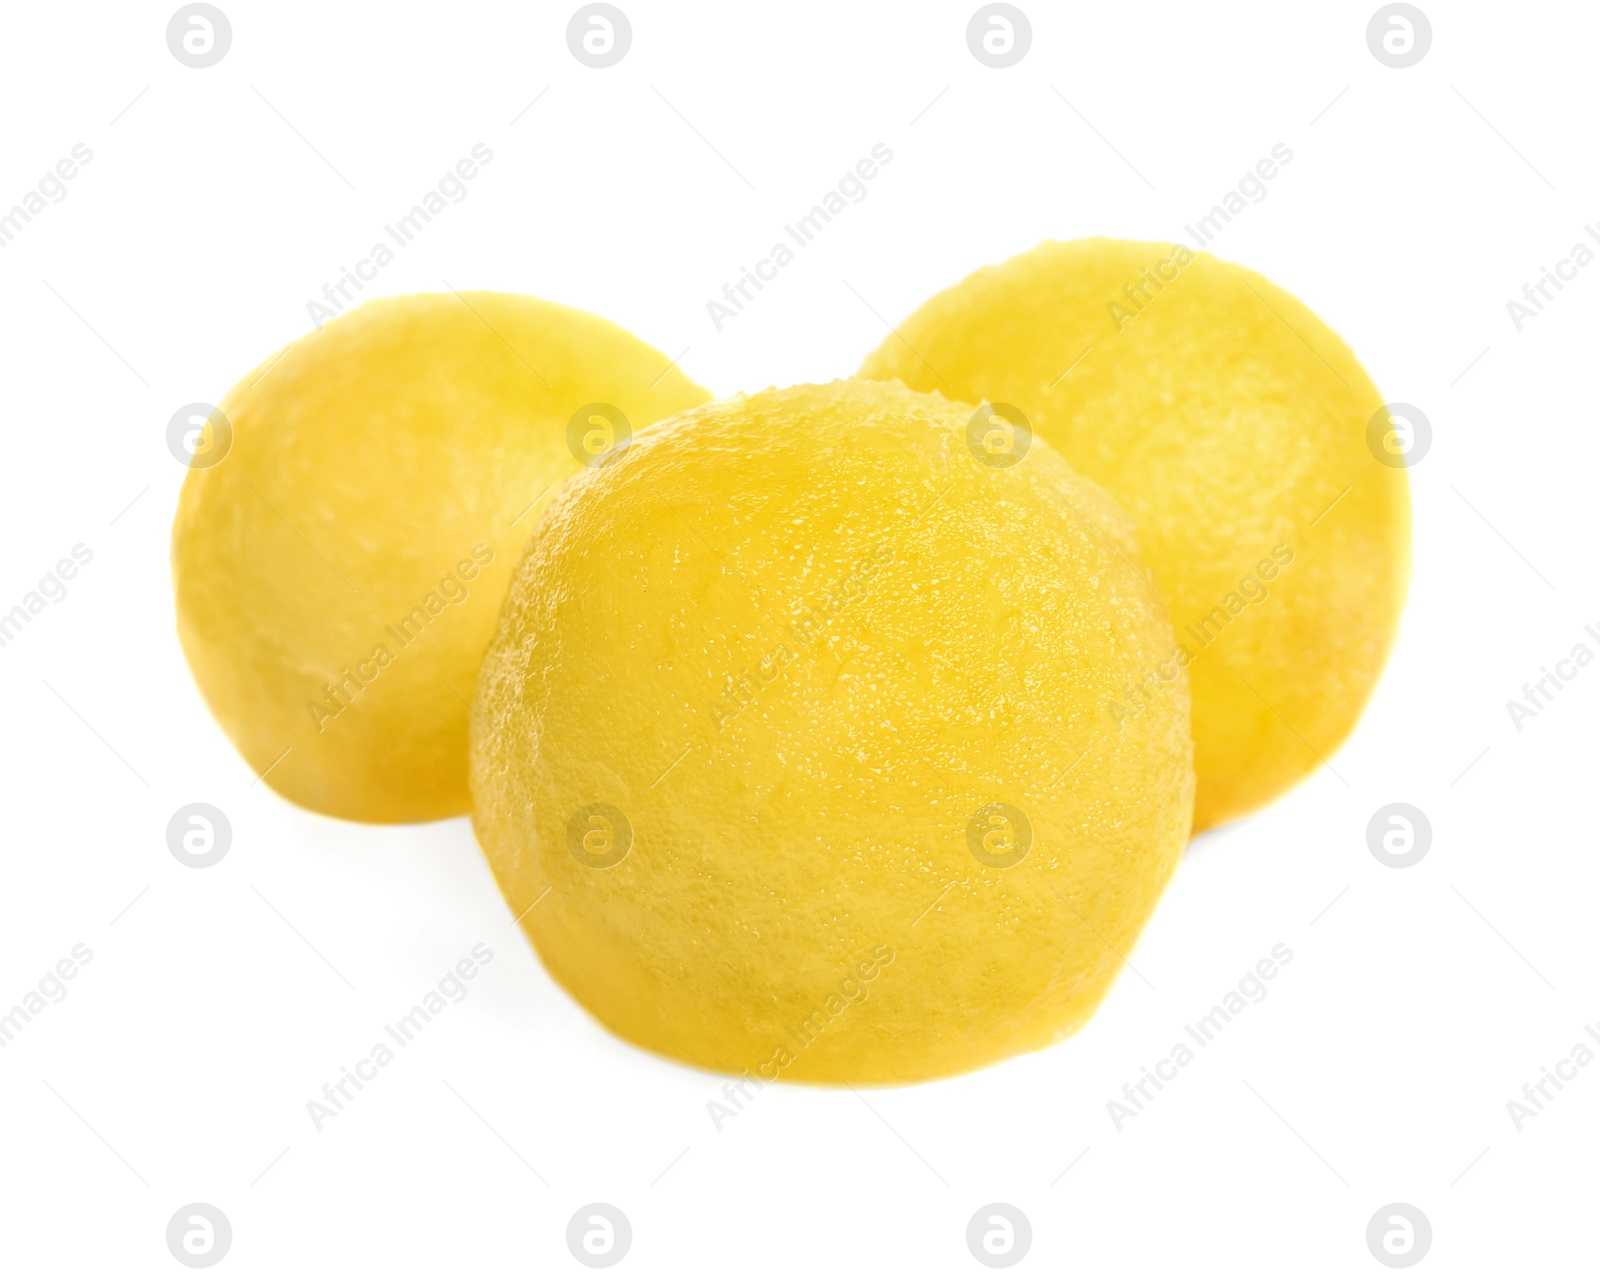 Photo of Juicy sweet melon balls on white background